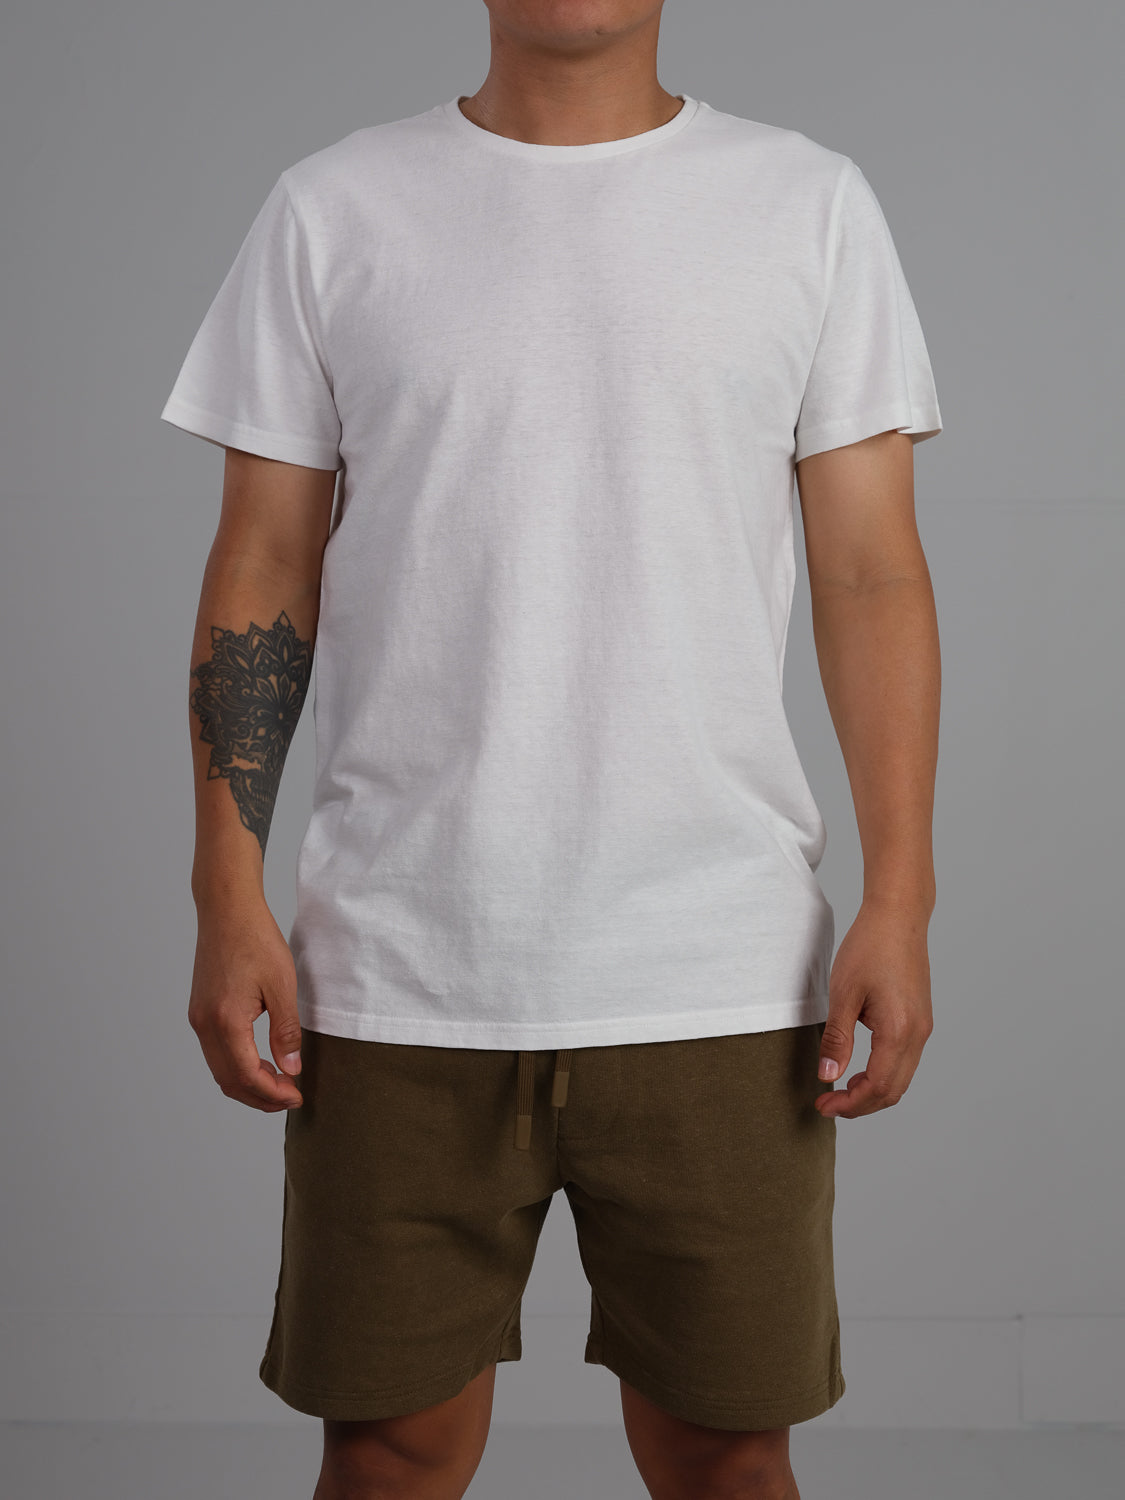 Dope - Hemp and organic cotton crew neck t-shirt